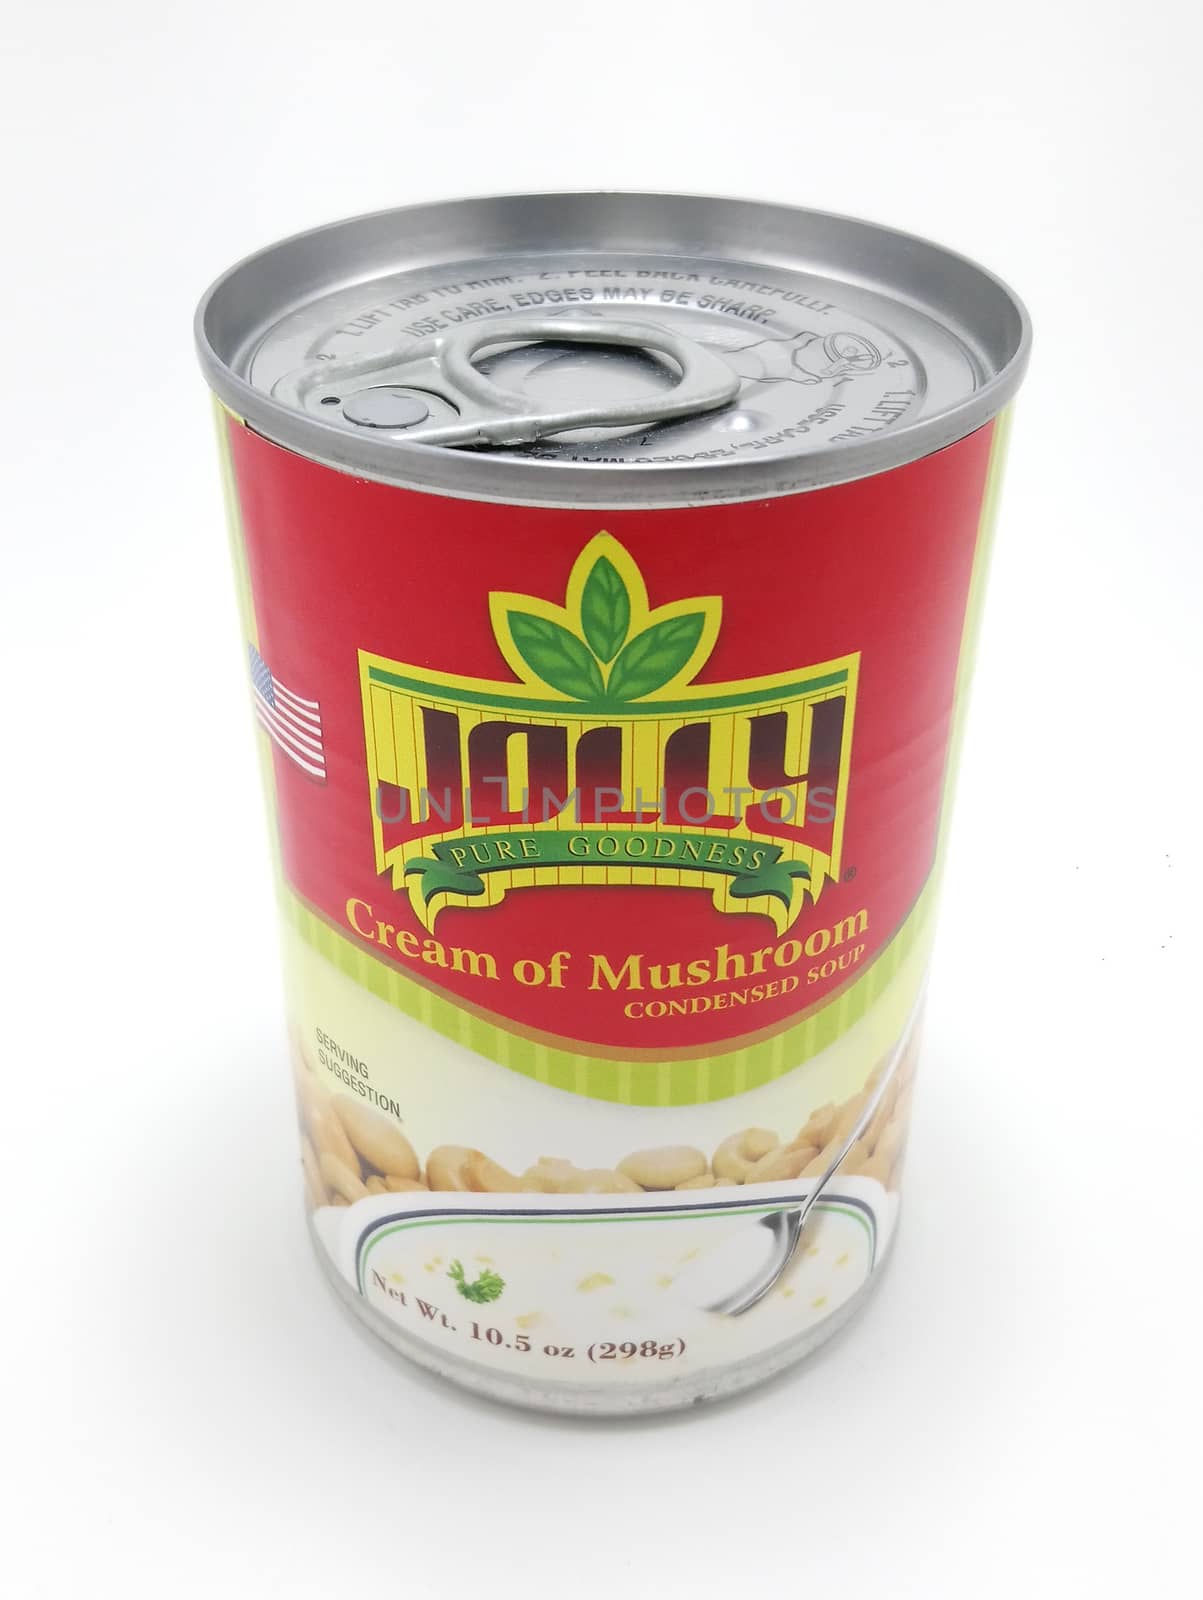 Jollly cream of mushroom condensed soup in Manila, Philippines by imwaltersy